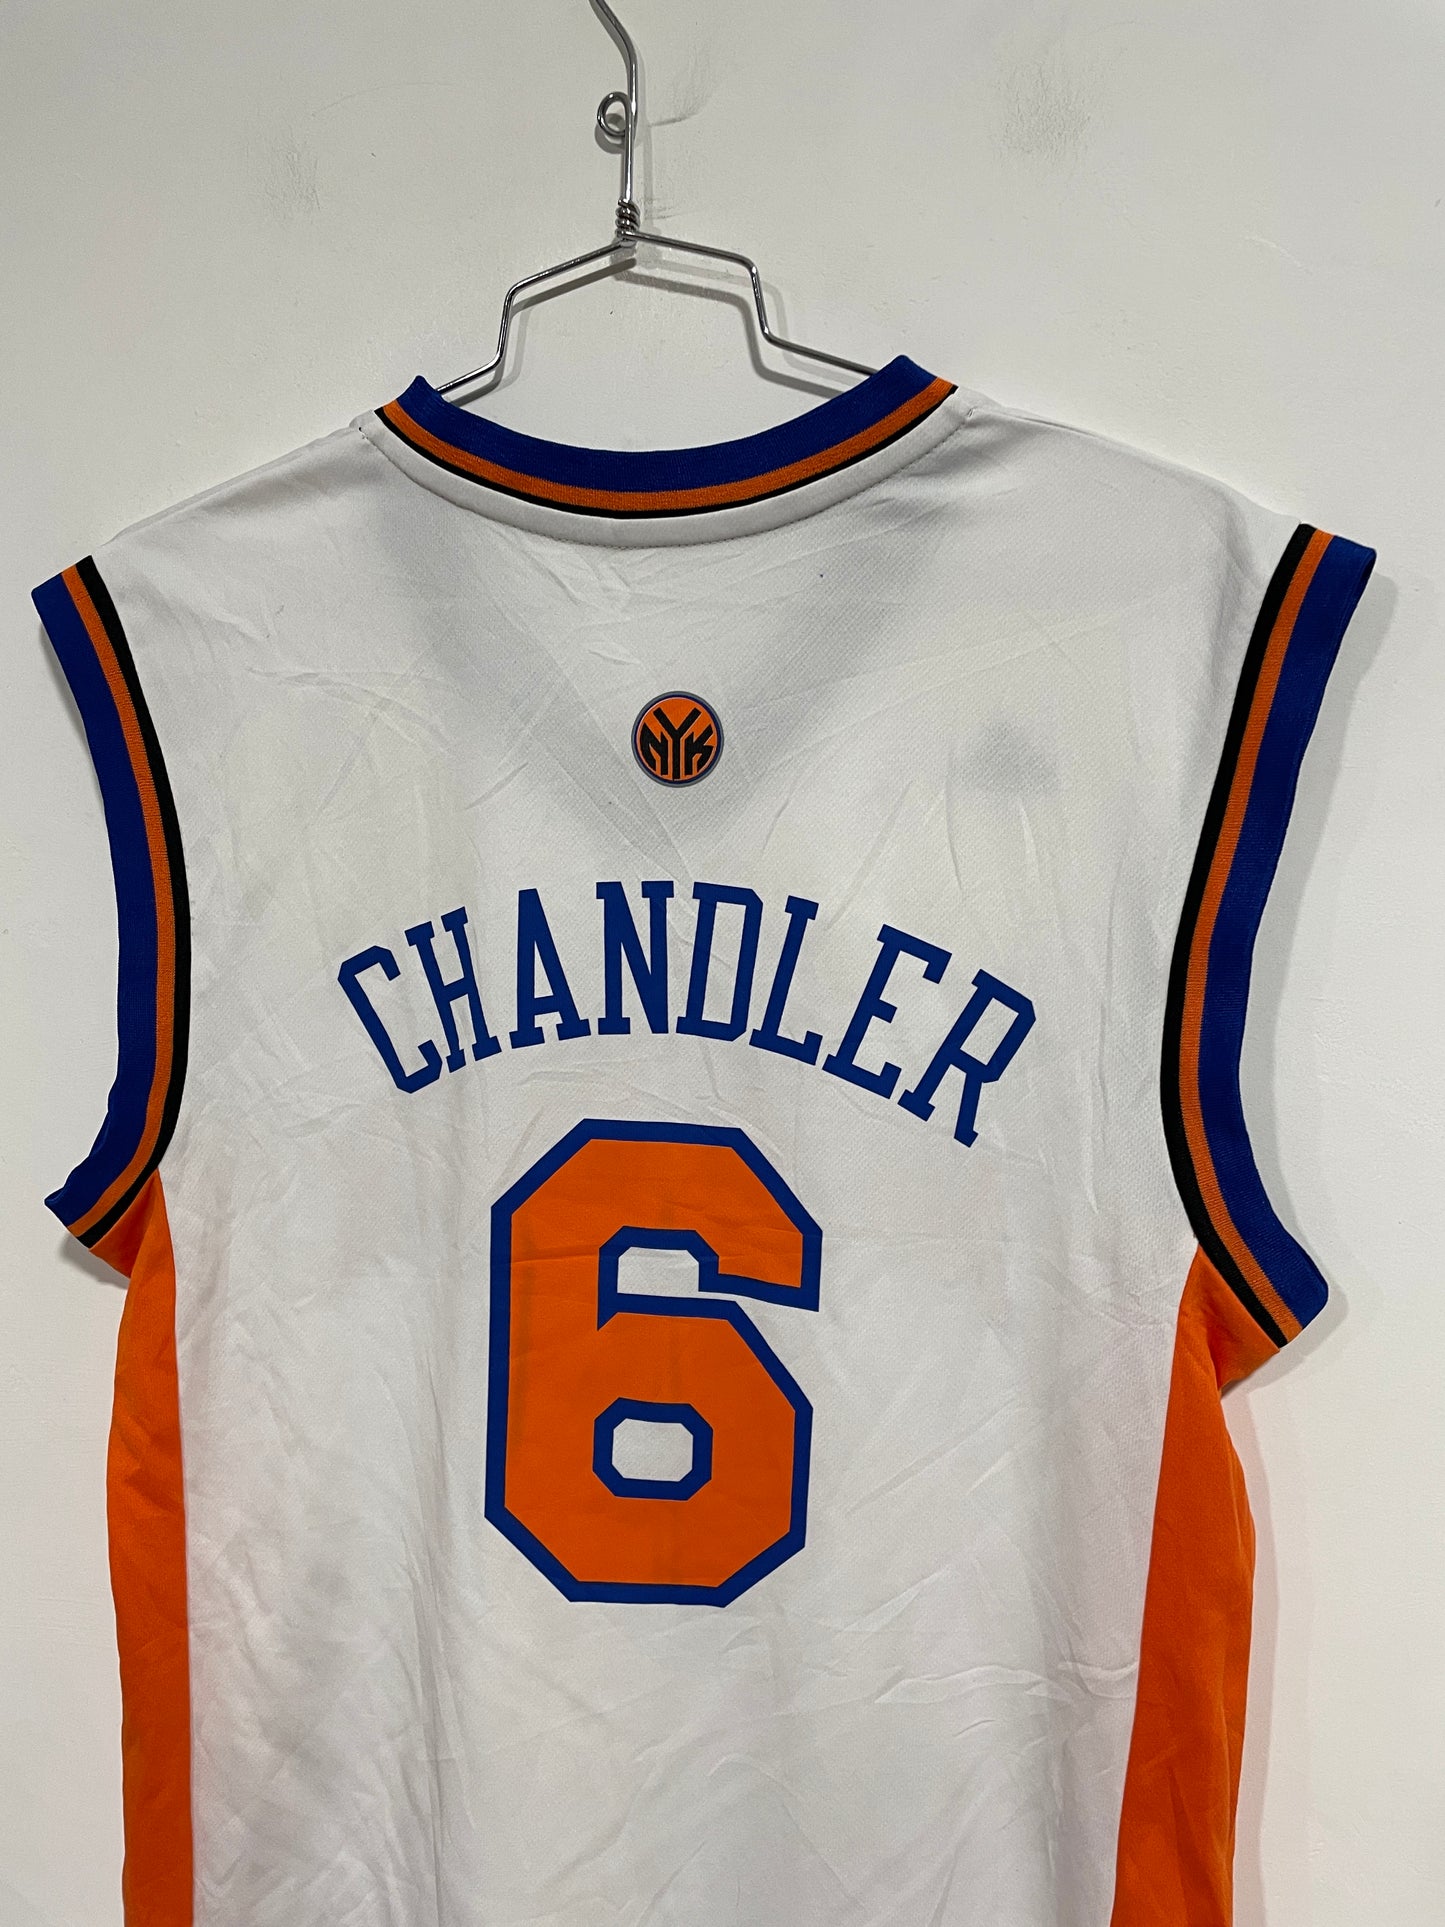 Canotta Basket Adidas New York Knicks (C246)